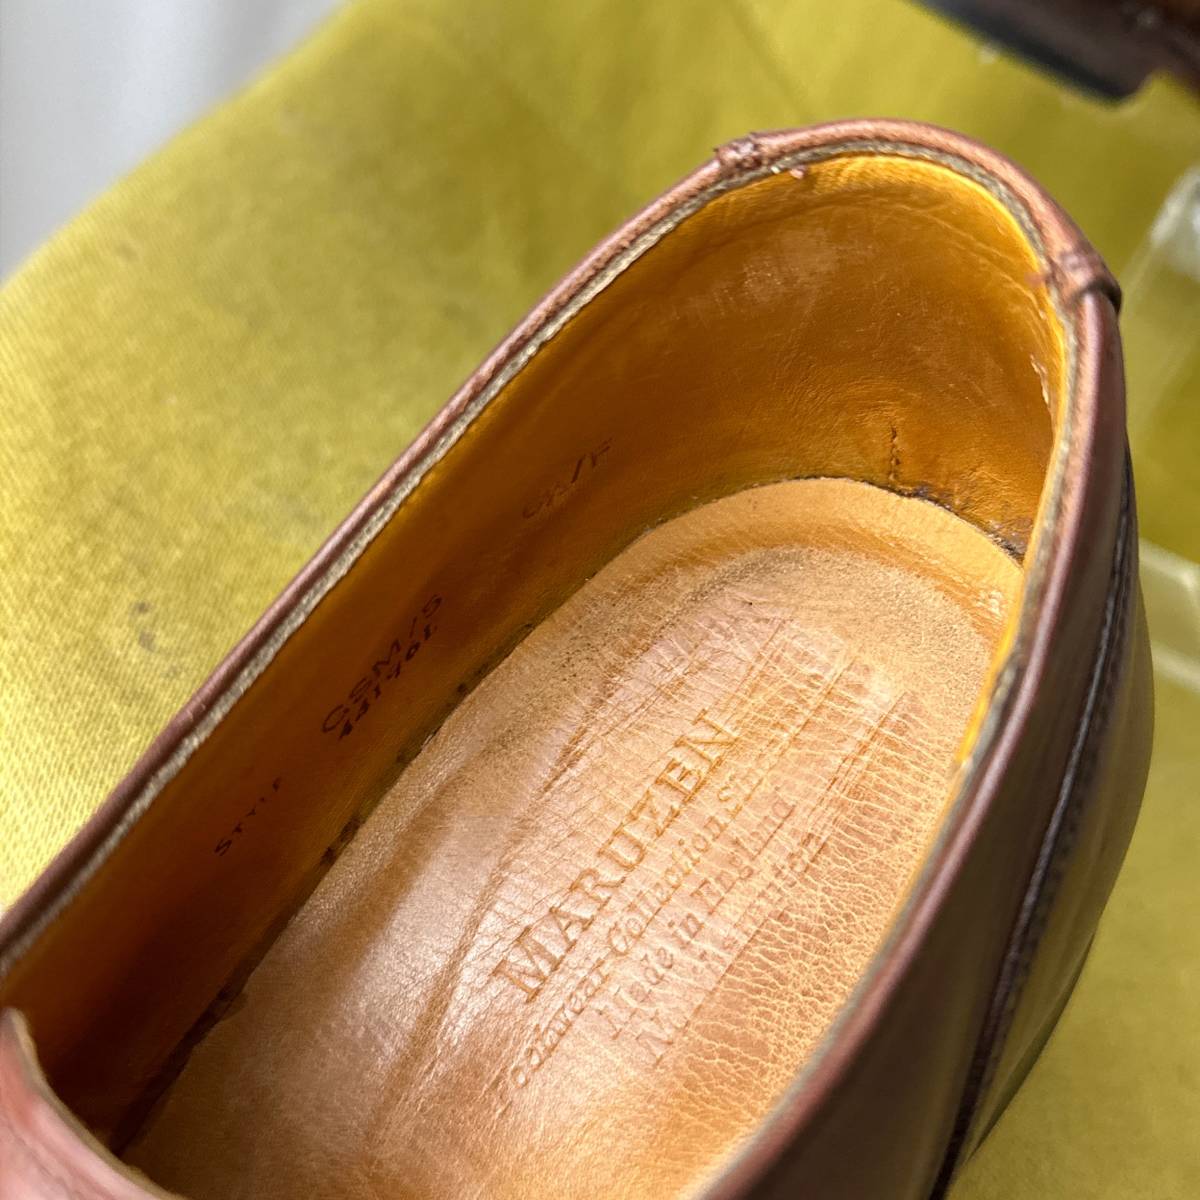 GRENSON Glenn son производства MARUZEN специальный заказ U chip кожа обувь 6.5F Британия производства бизнес 25.0 соответствует 